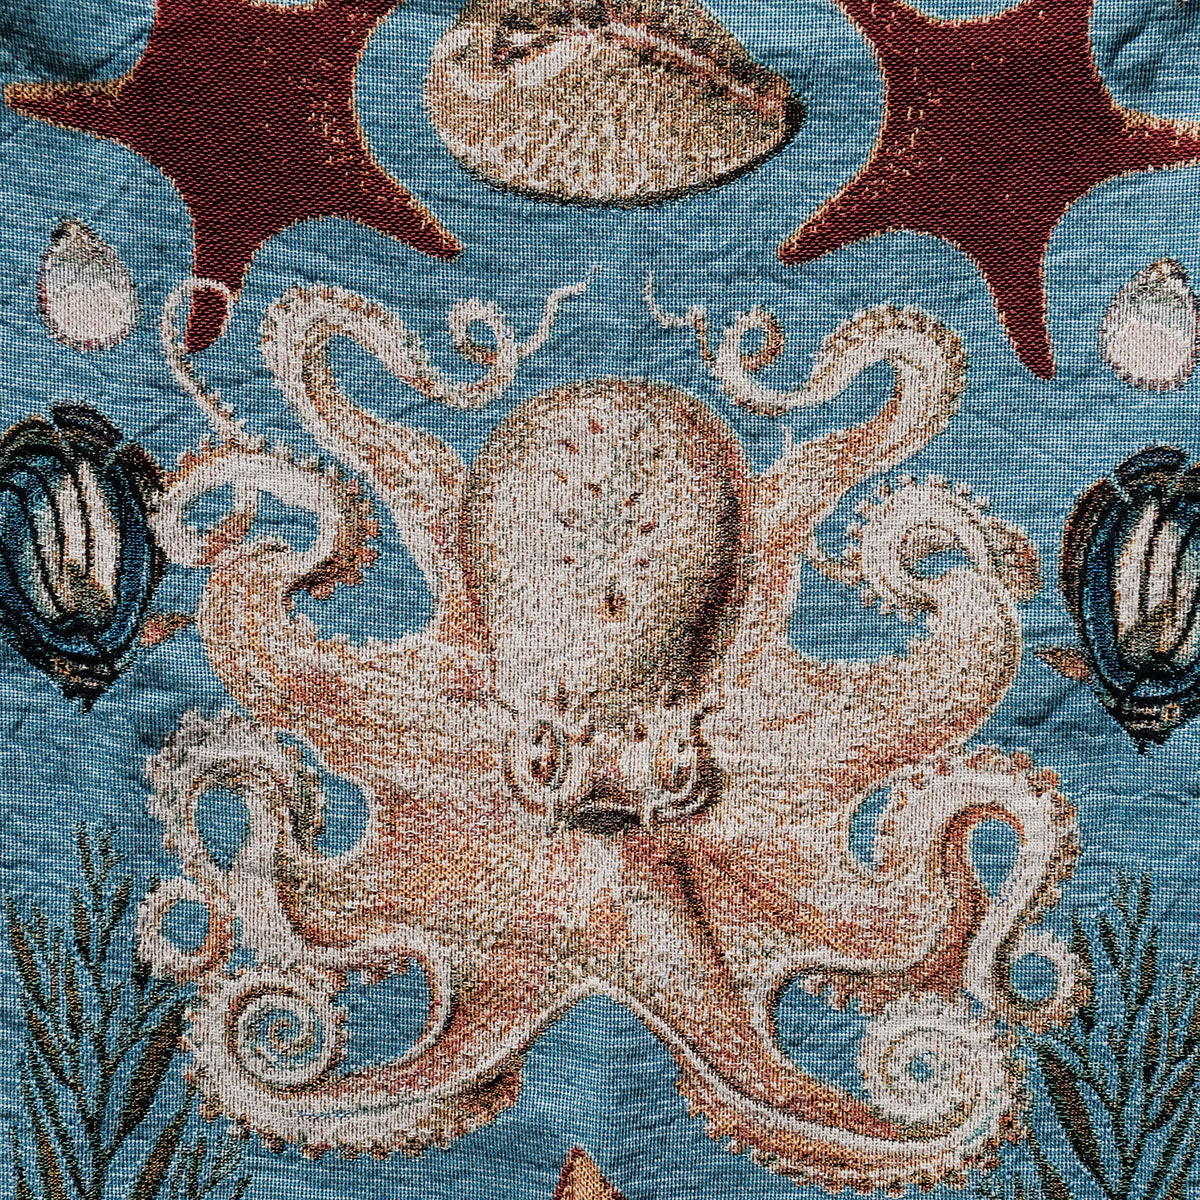 Octopus Ocean Woven Blanket - Relatable Basic